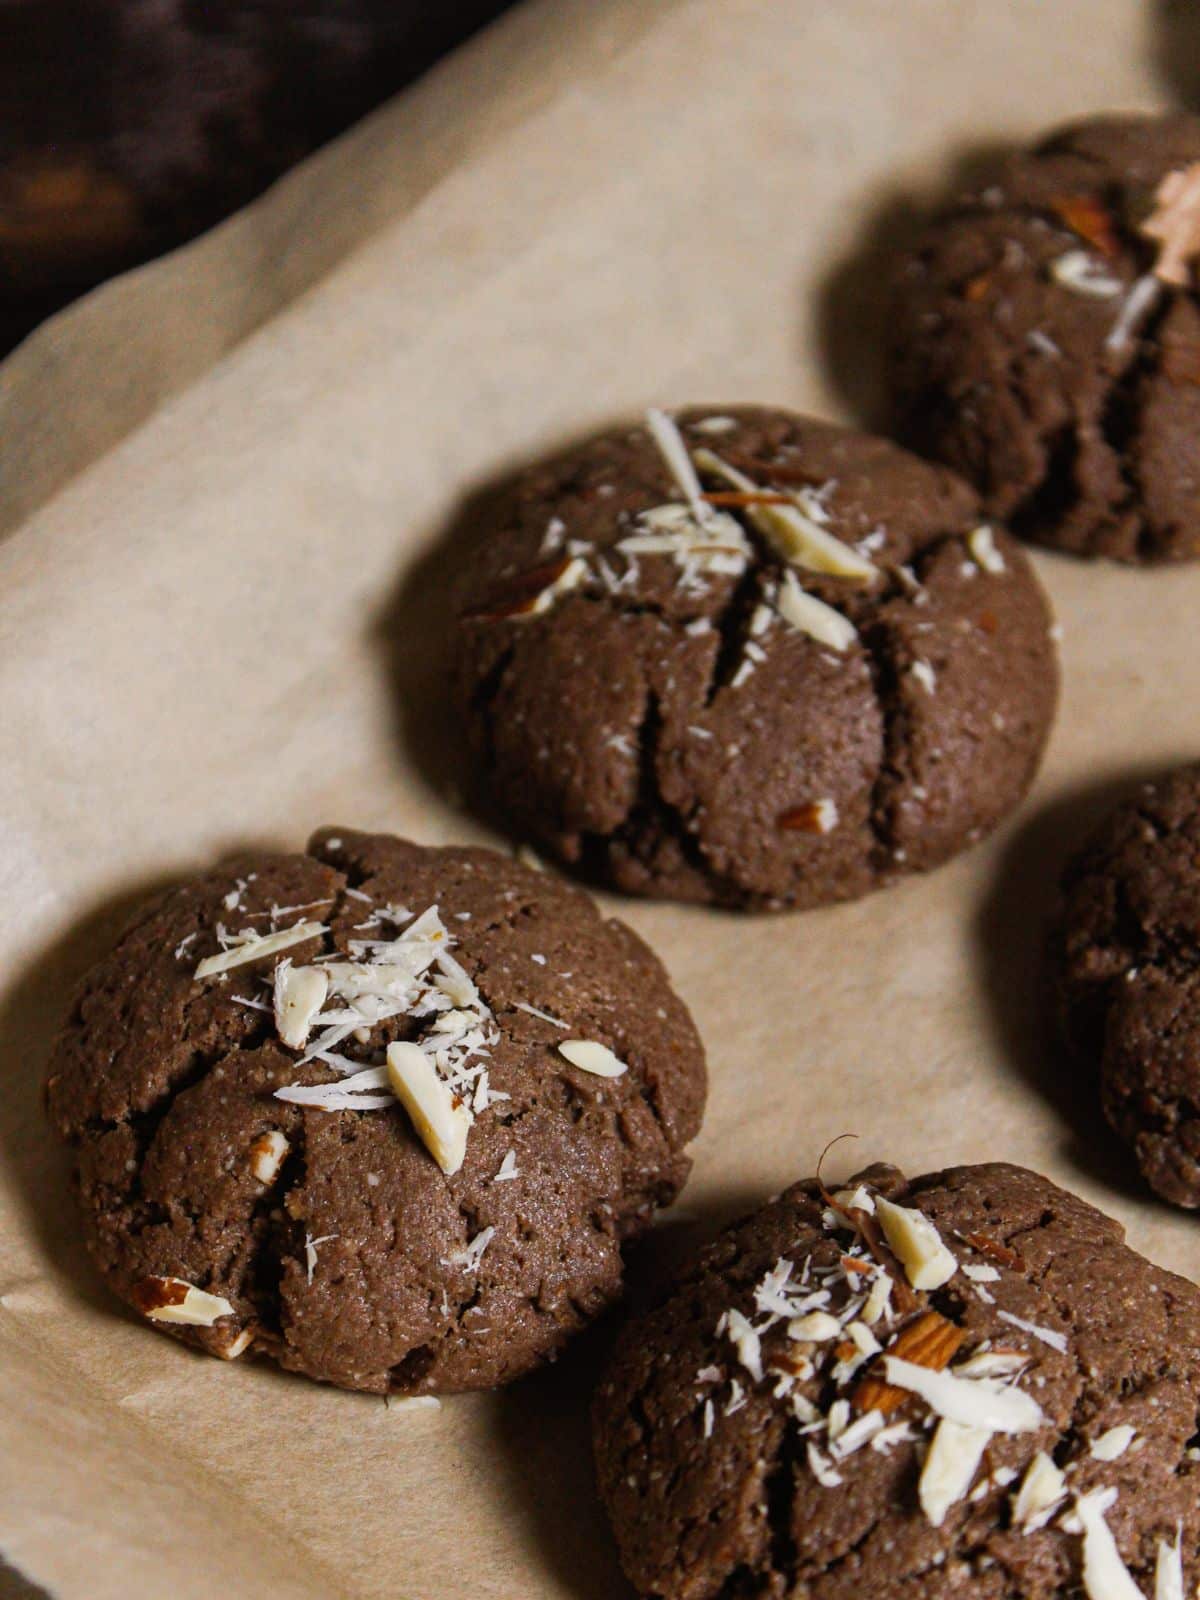 Enjoy Almond Chocolate Cookies with tea or coffee